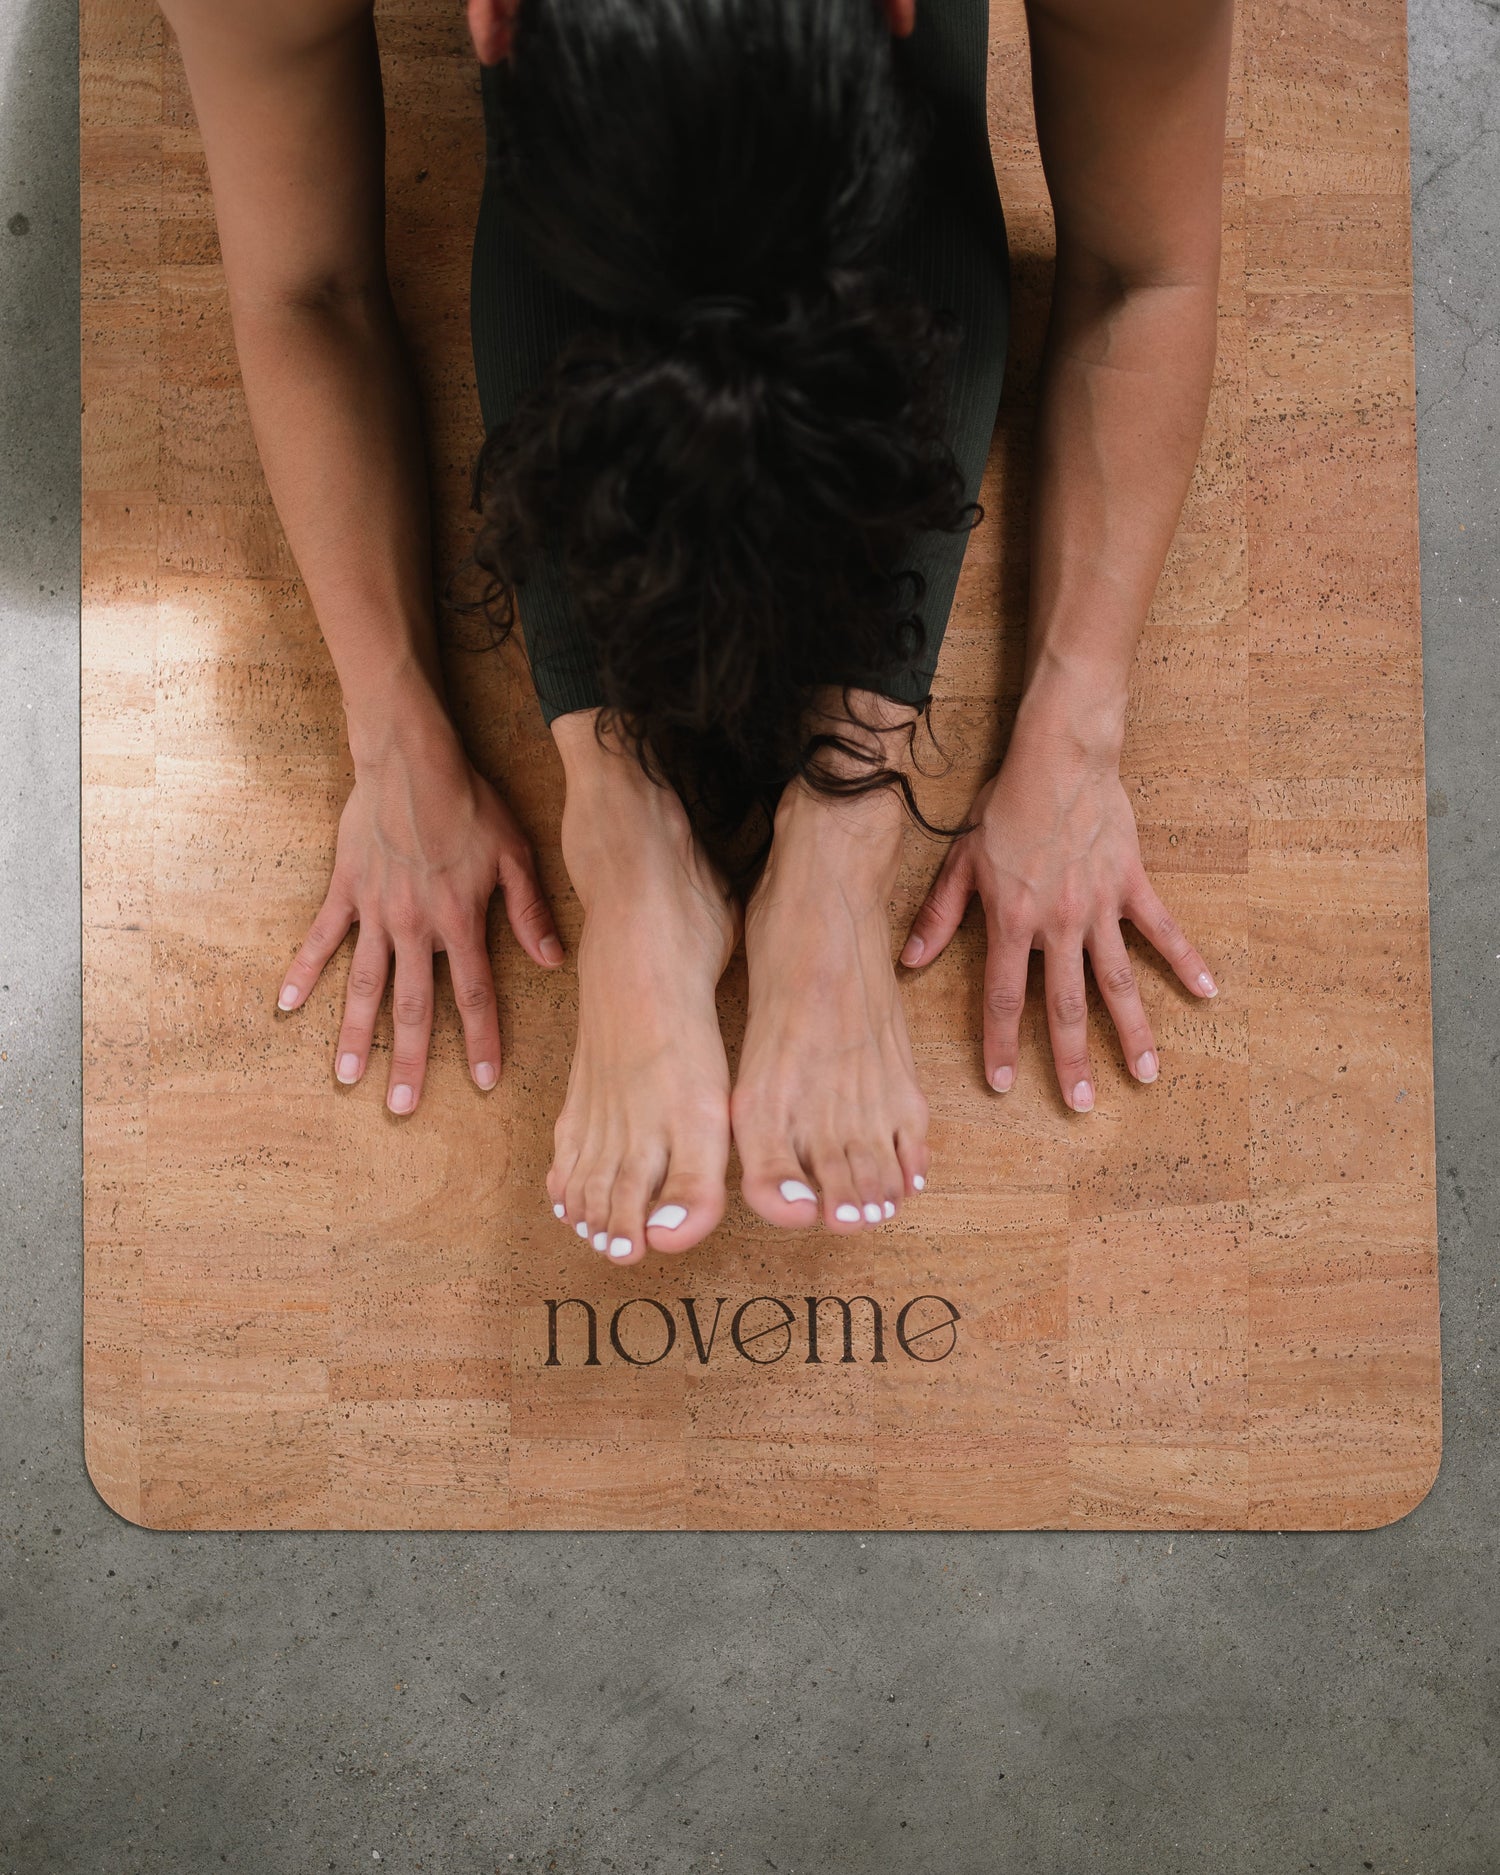 Yogi practicing on a Noveme cork yoga mat